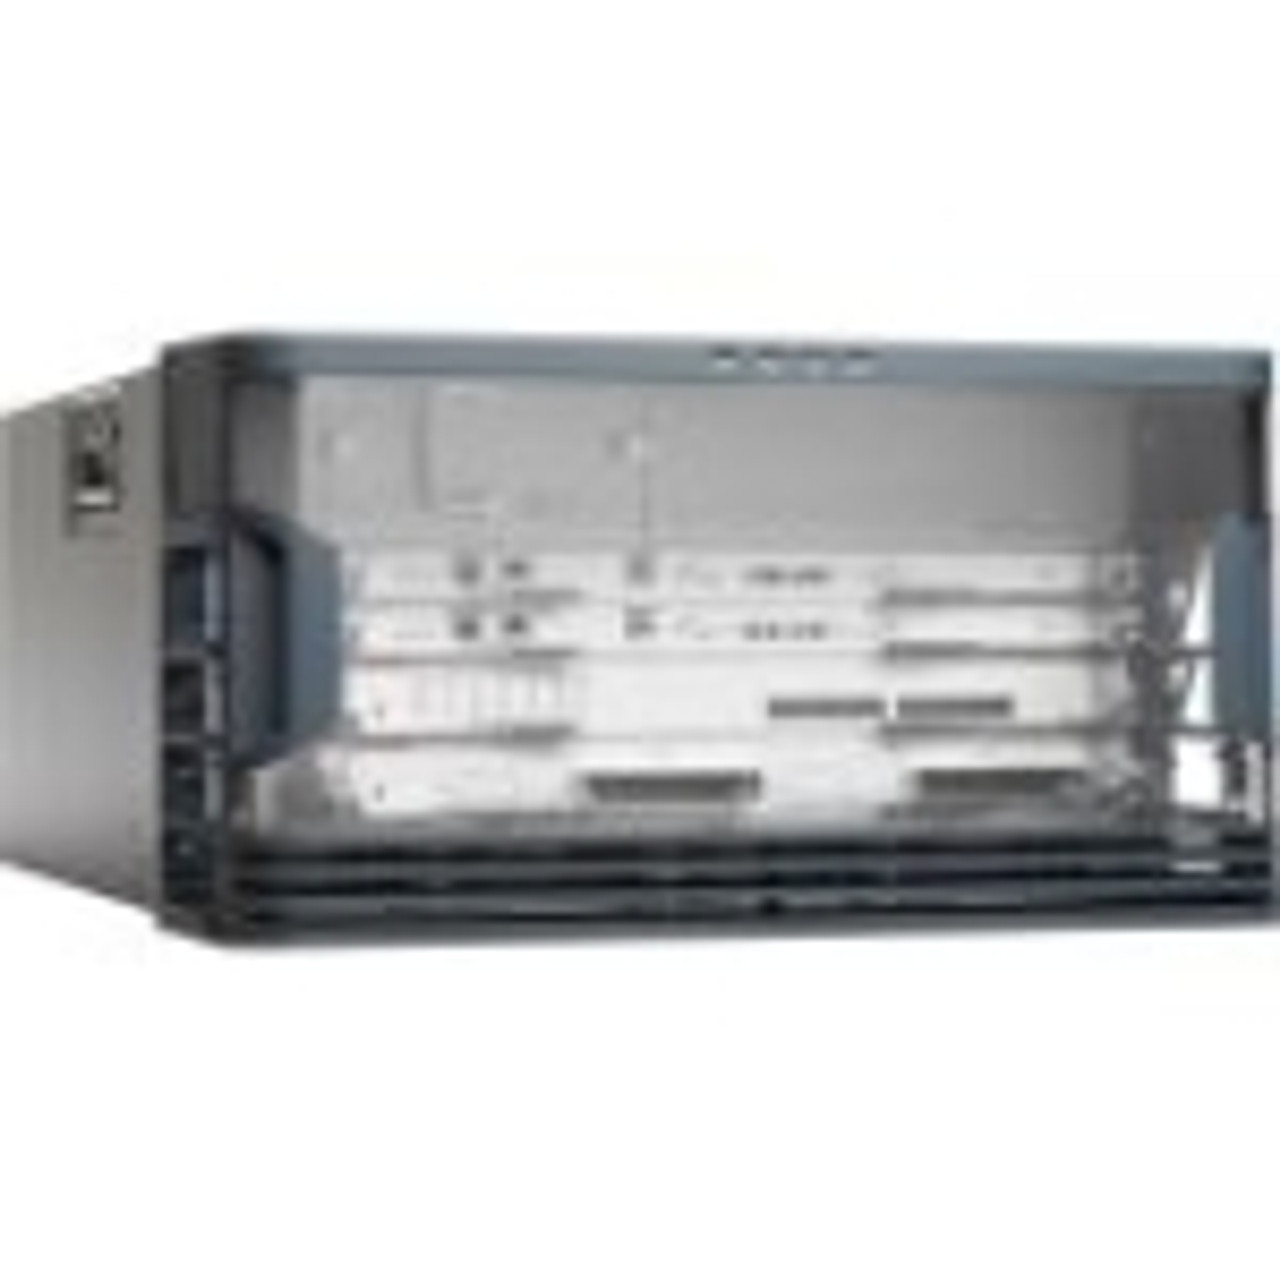 C1-N7004-S2 Cisco Nexus 7000 4x Expansion Slots Manageable Rack-Mountable 7U Layer2 Switch (Refurbished)